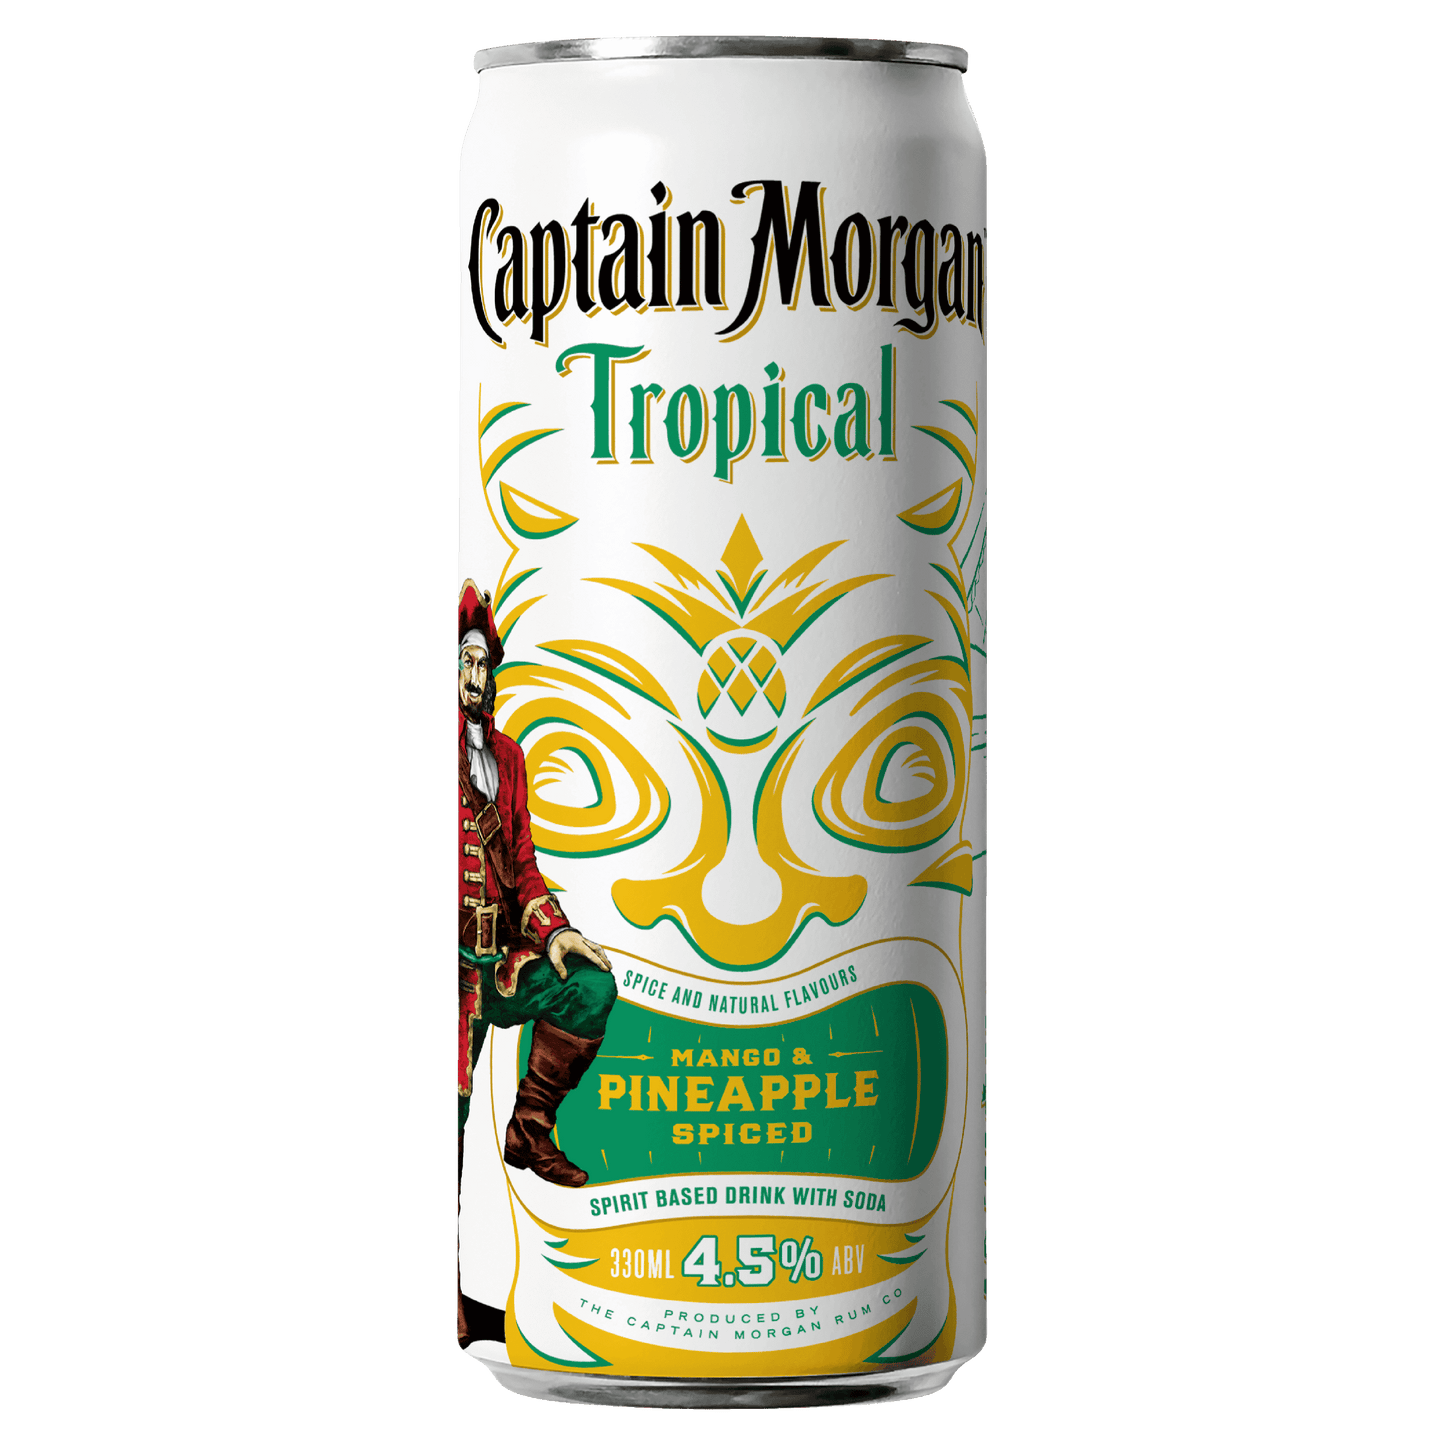 Captain Morgan Tropical Mango & Pineapple